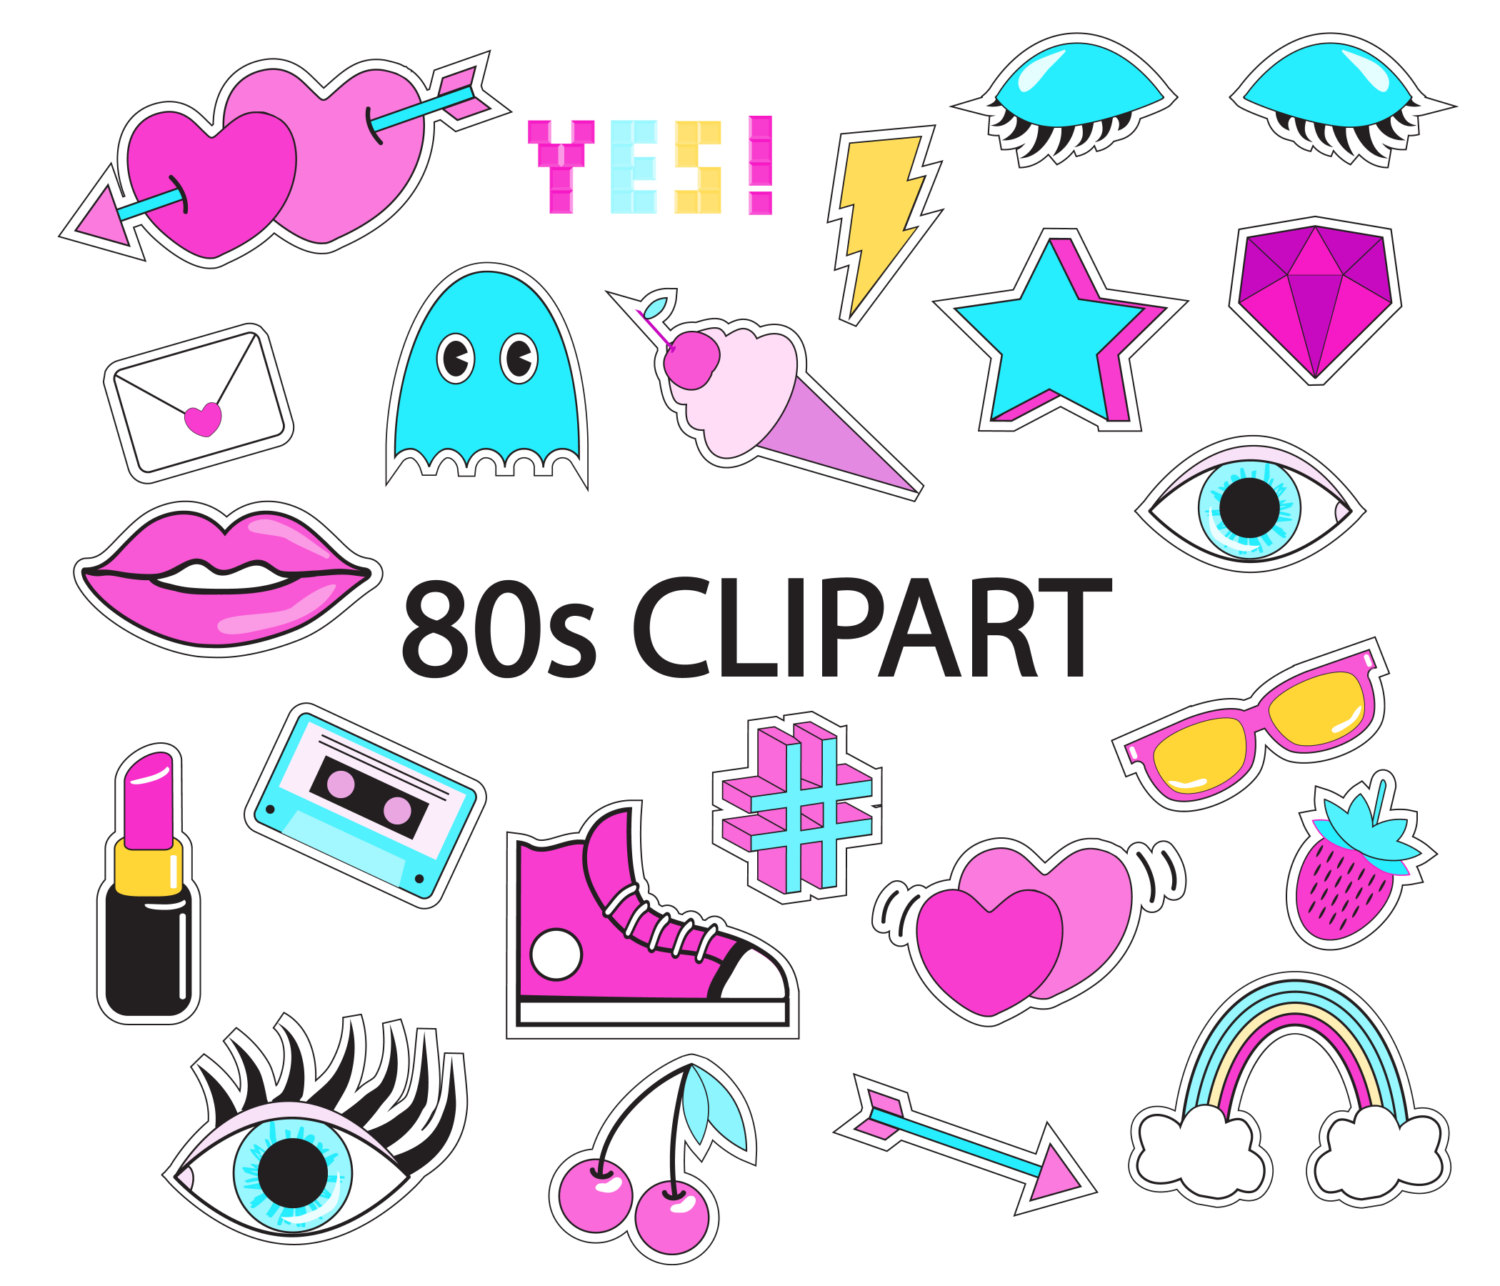 90s clipart 80's